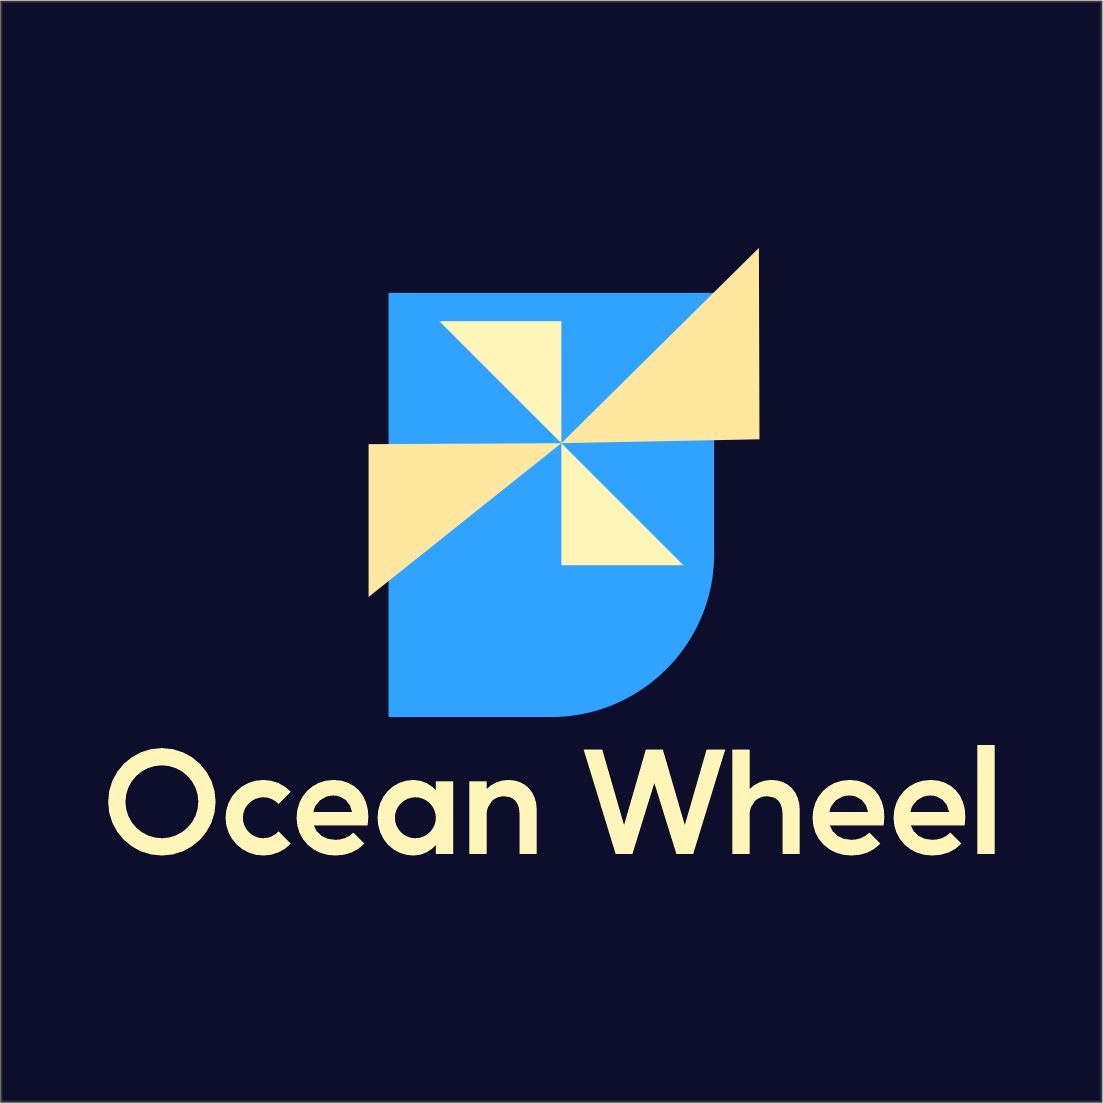 Ocean Wheel preview image.